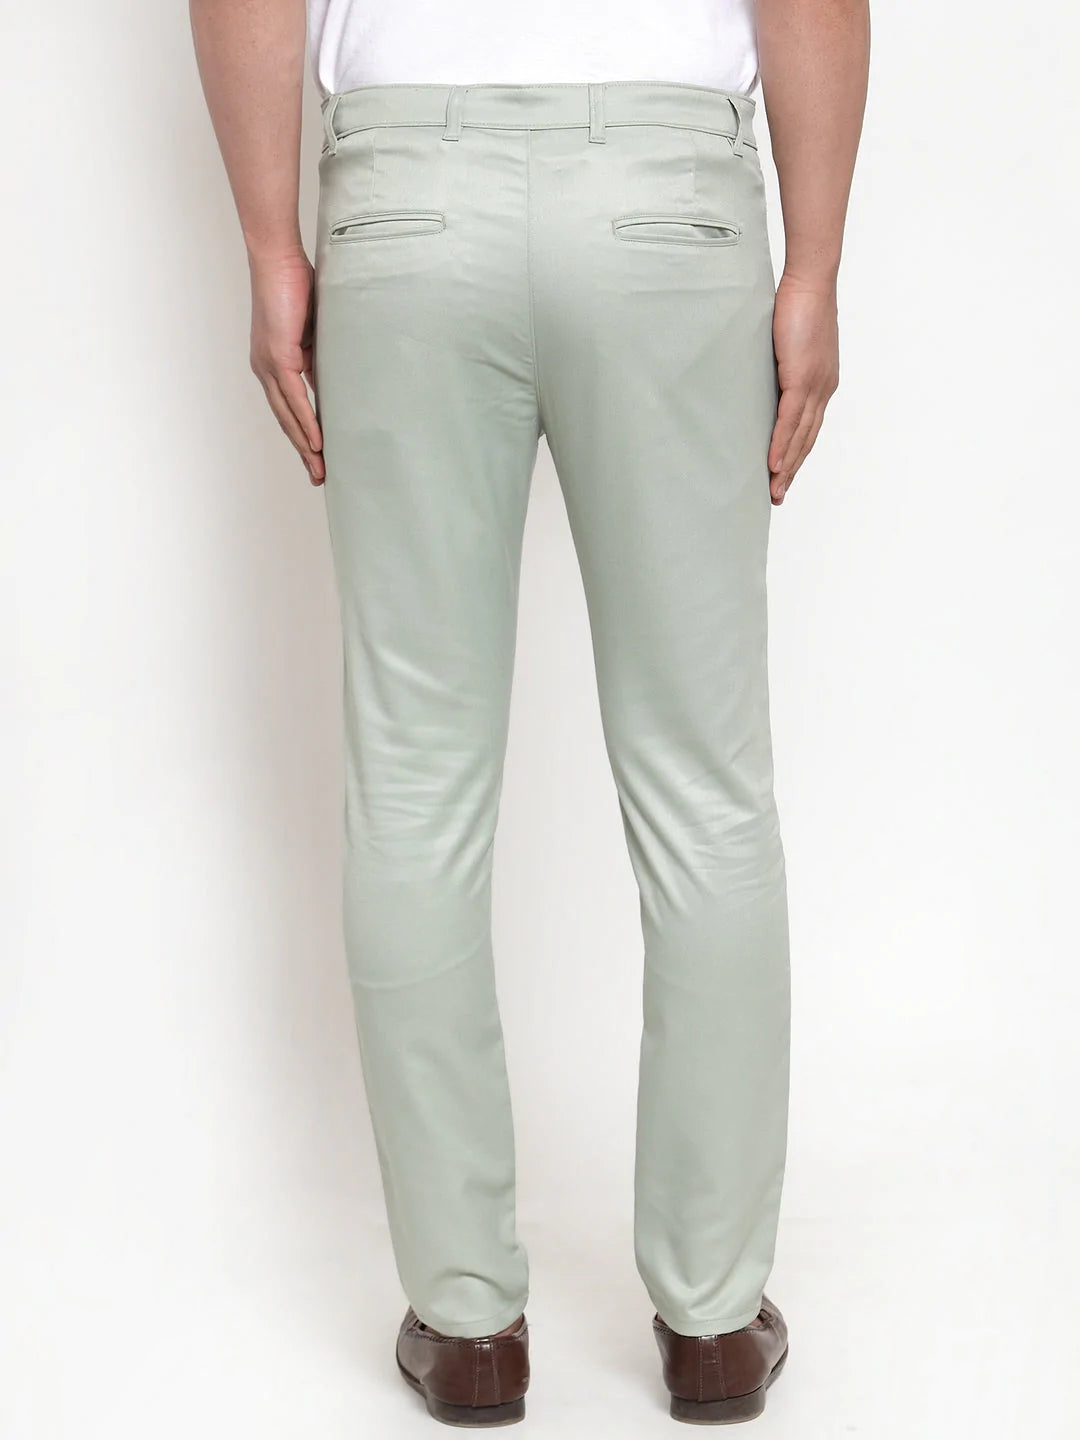 Jainish Men's Green Solid Formal Trousers ( FGP 253Pista )